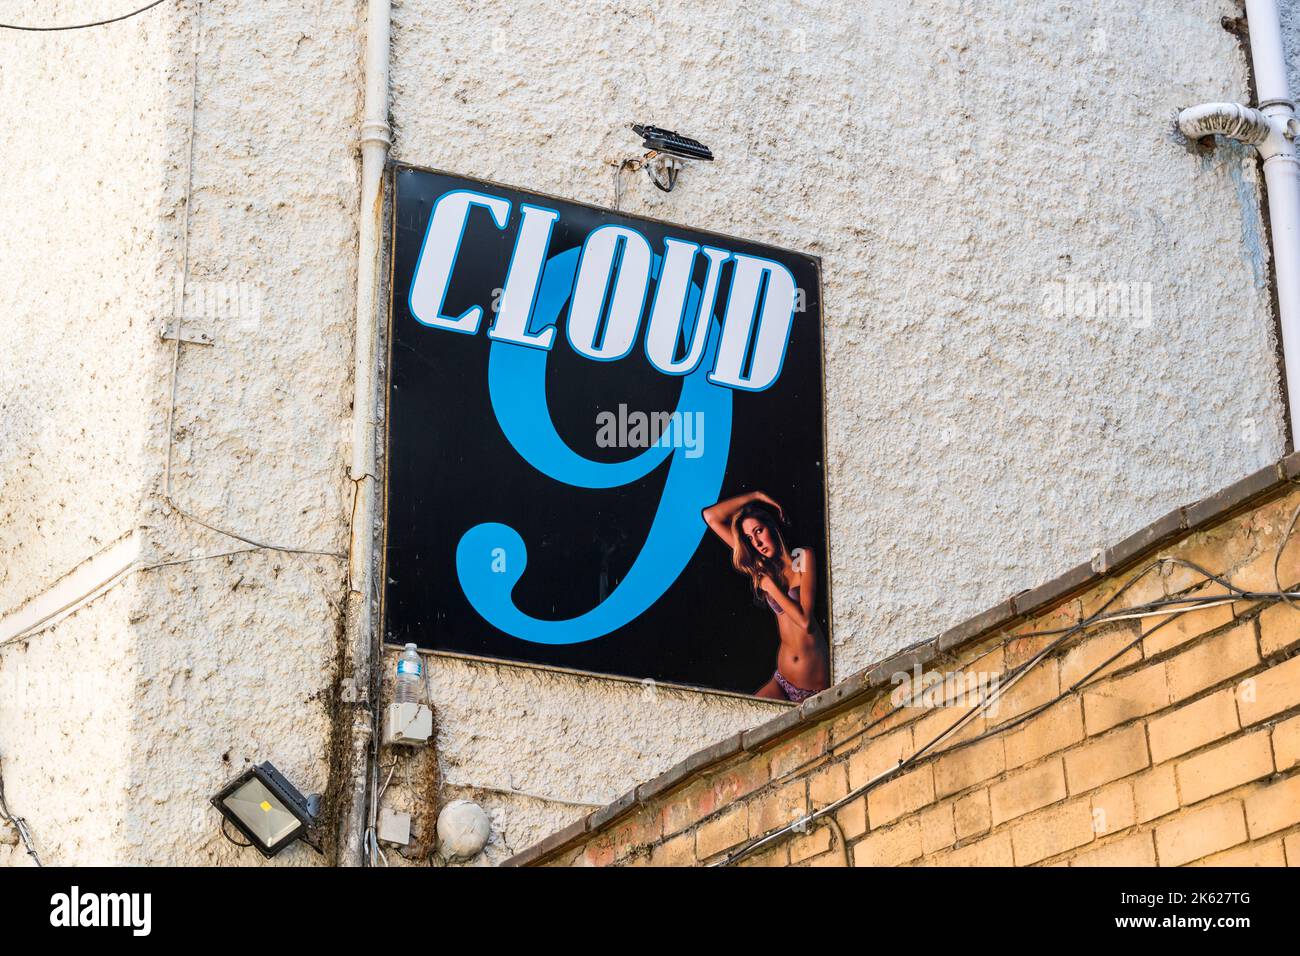 Cloud 9 lap dancing club, Kings Arms Yard, Lincoln city 2022 Stock Photo